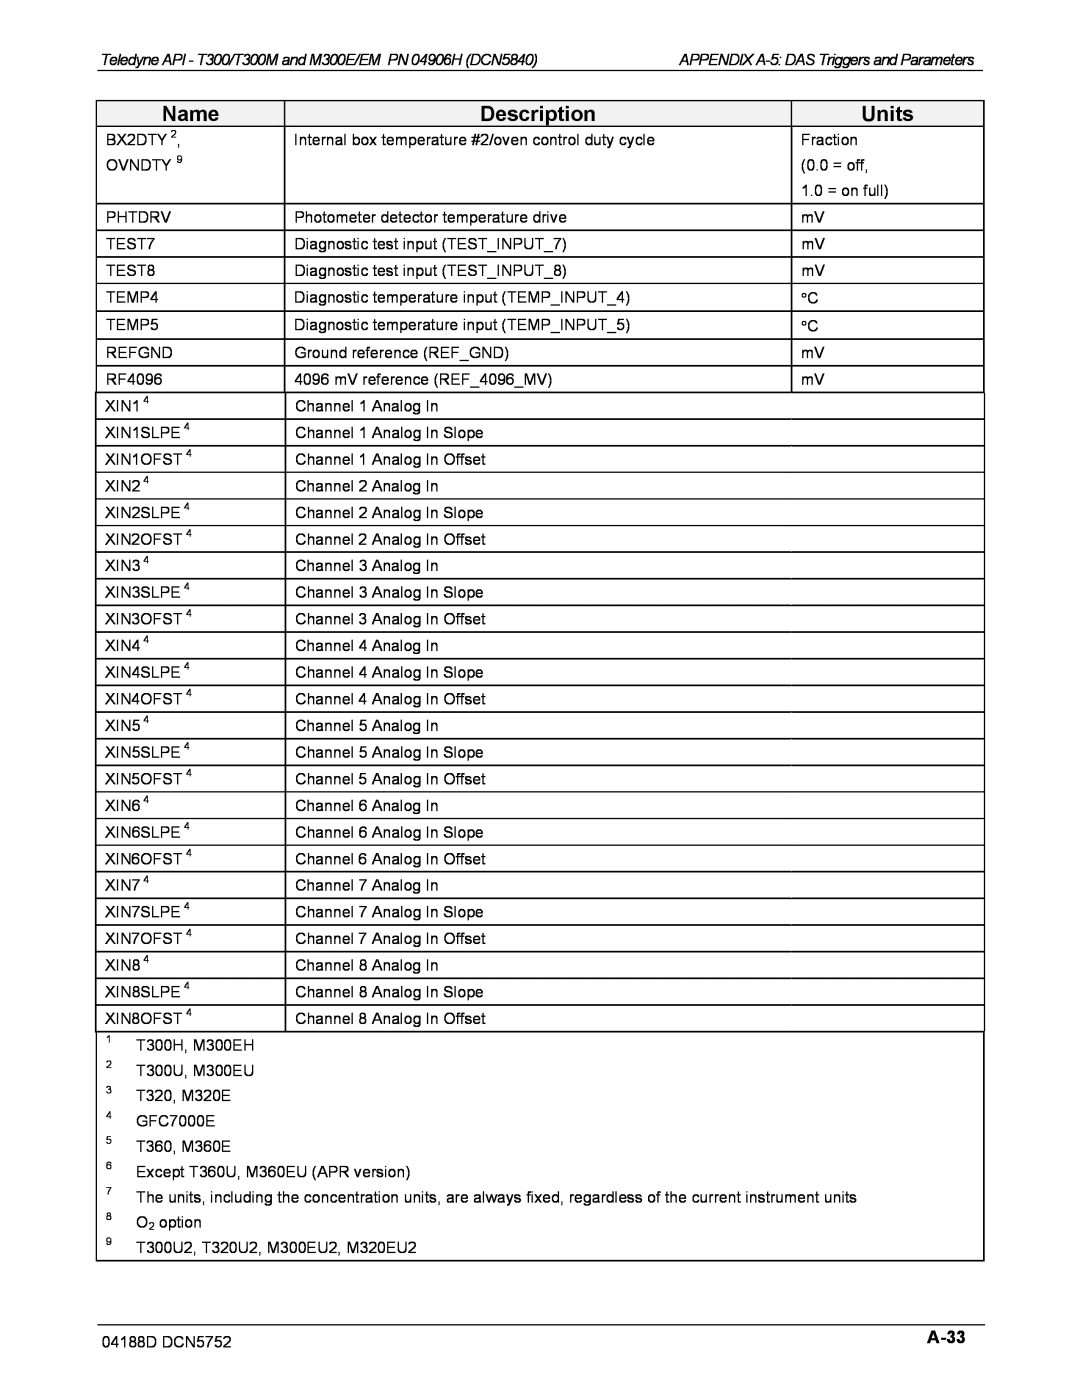 Teledyne M300EM operation manual Name, Description, Units, A-33 